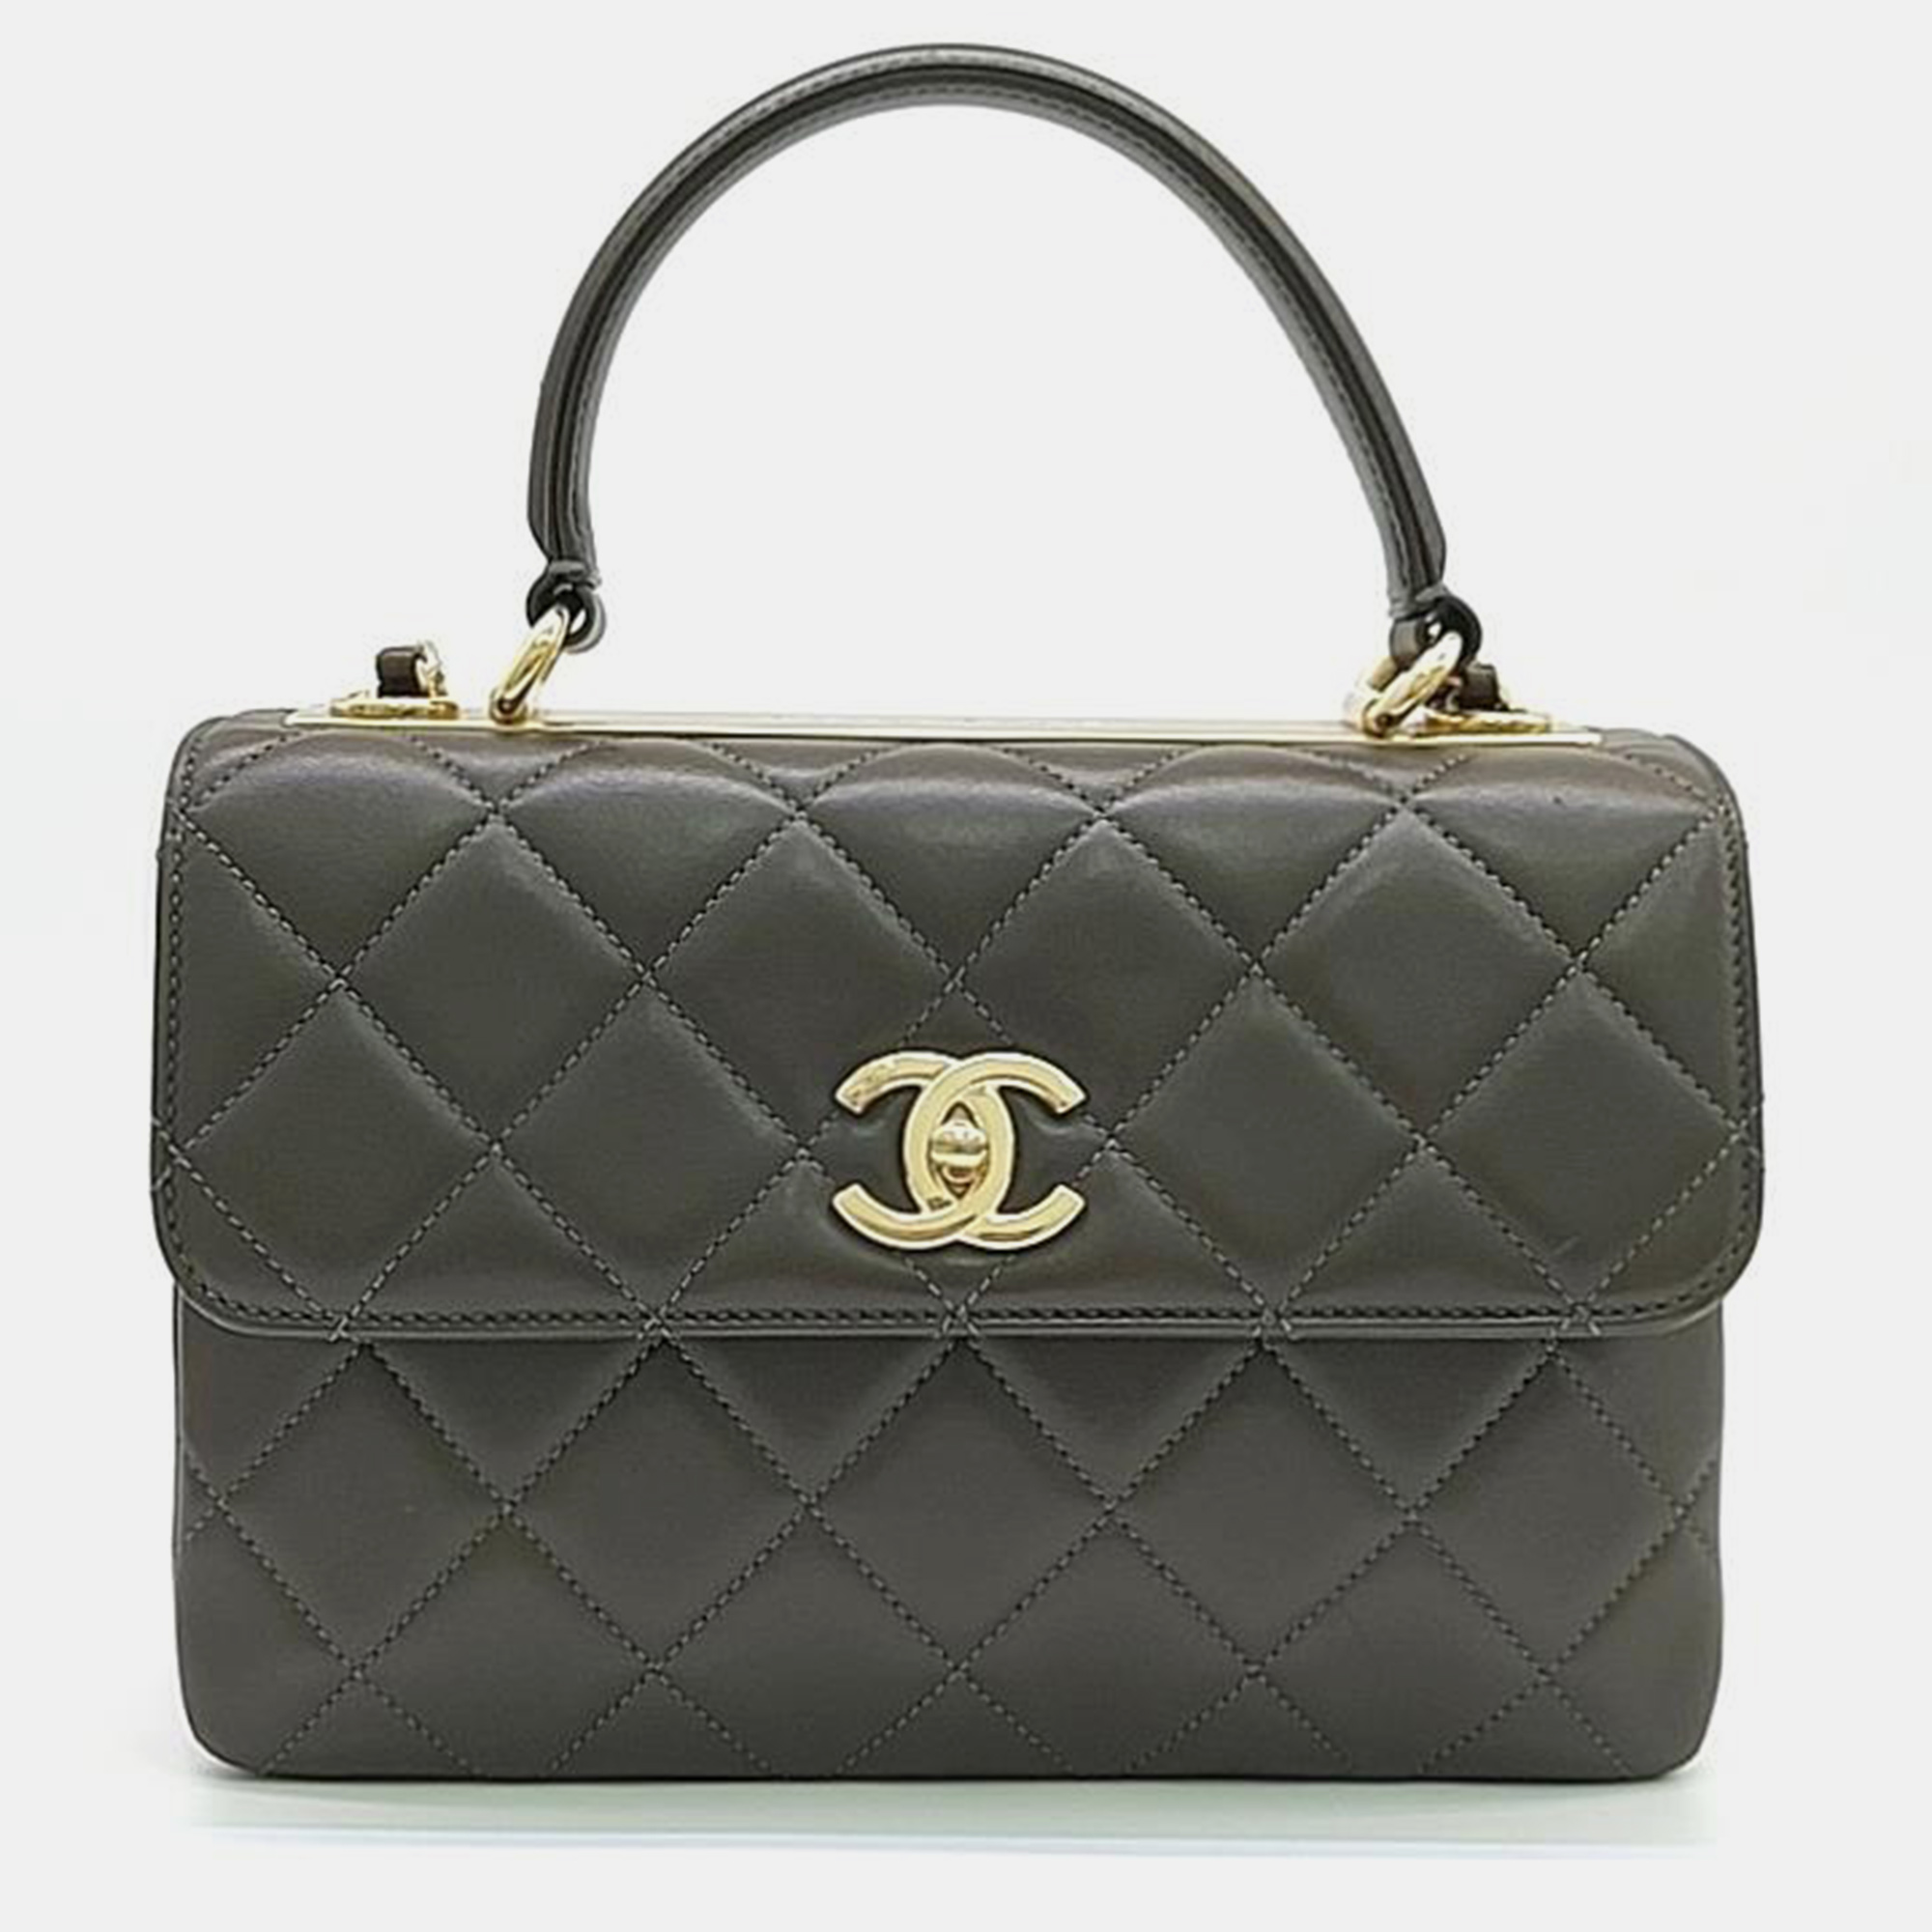 Chanel lambskin trendy cc small bag